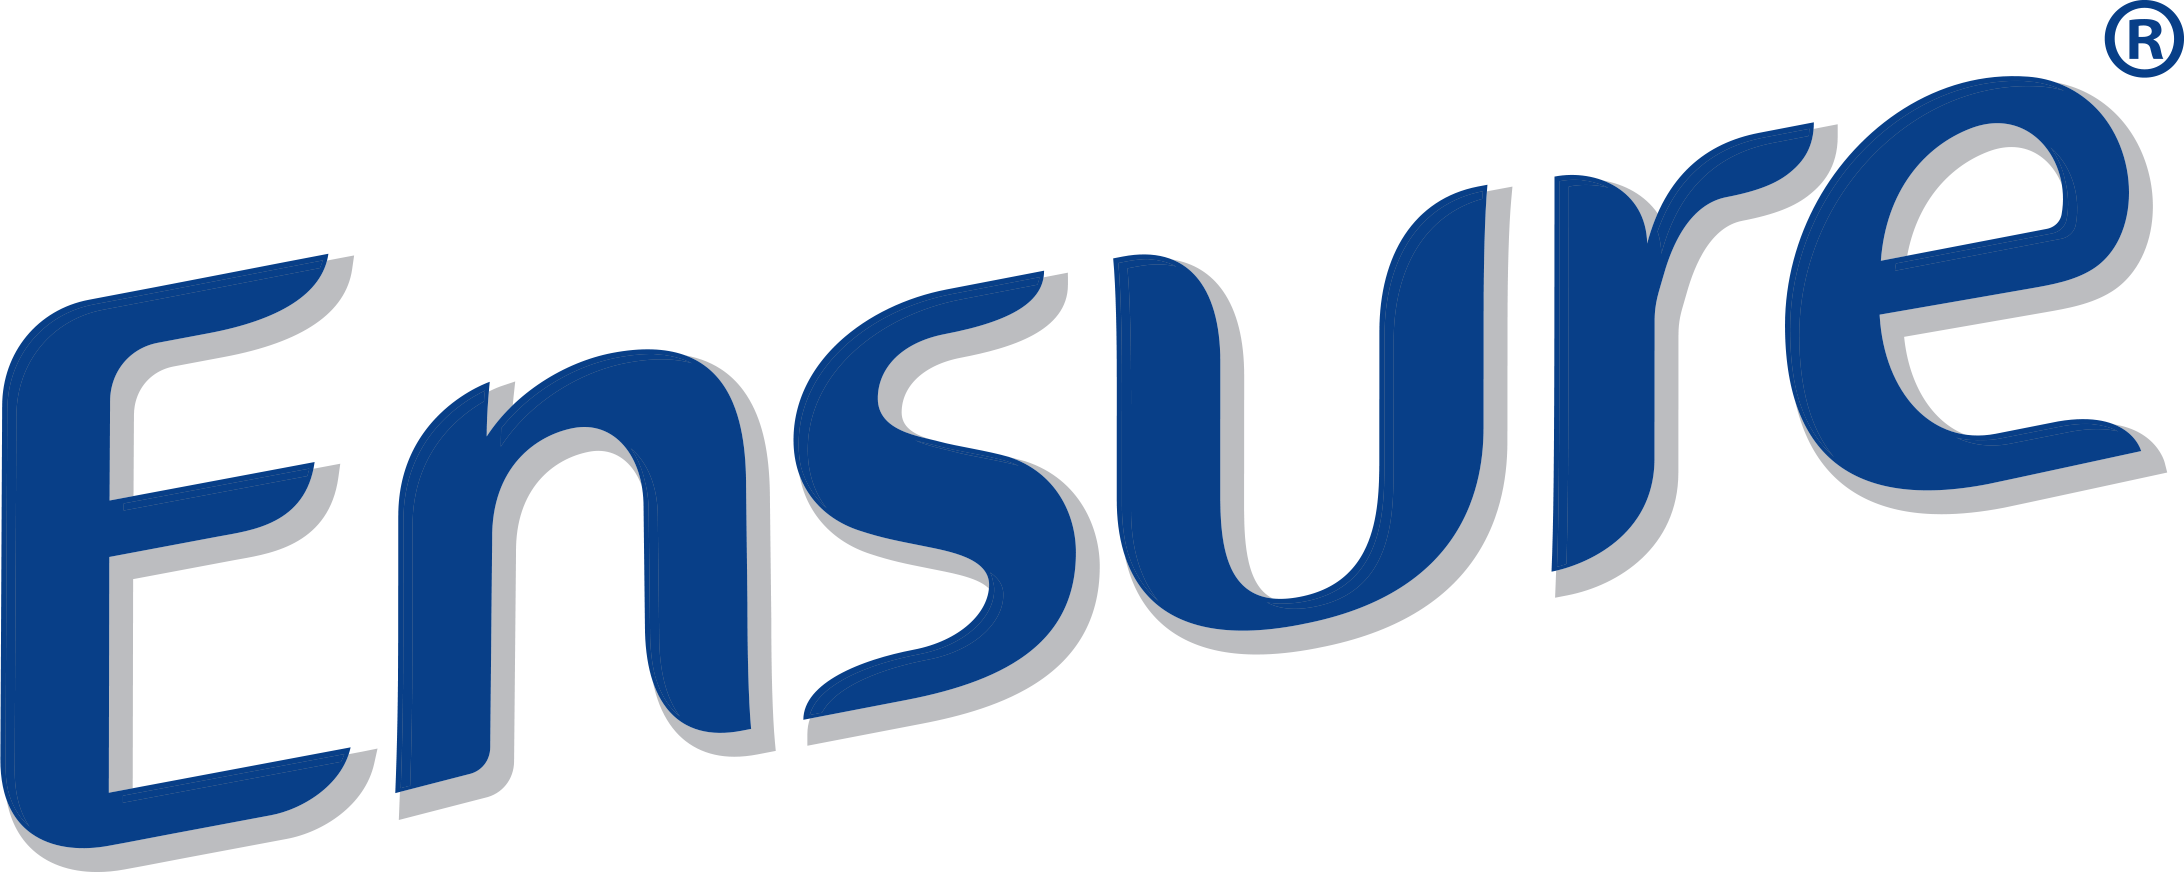 Logo de Ensure